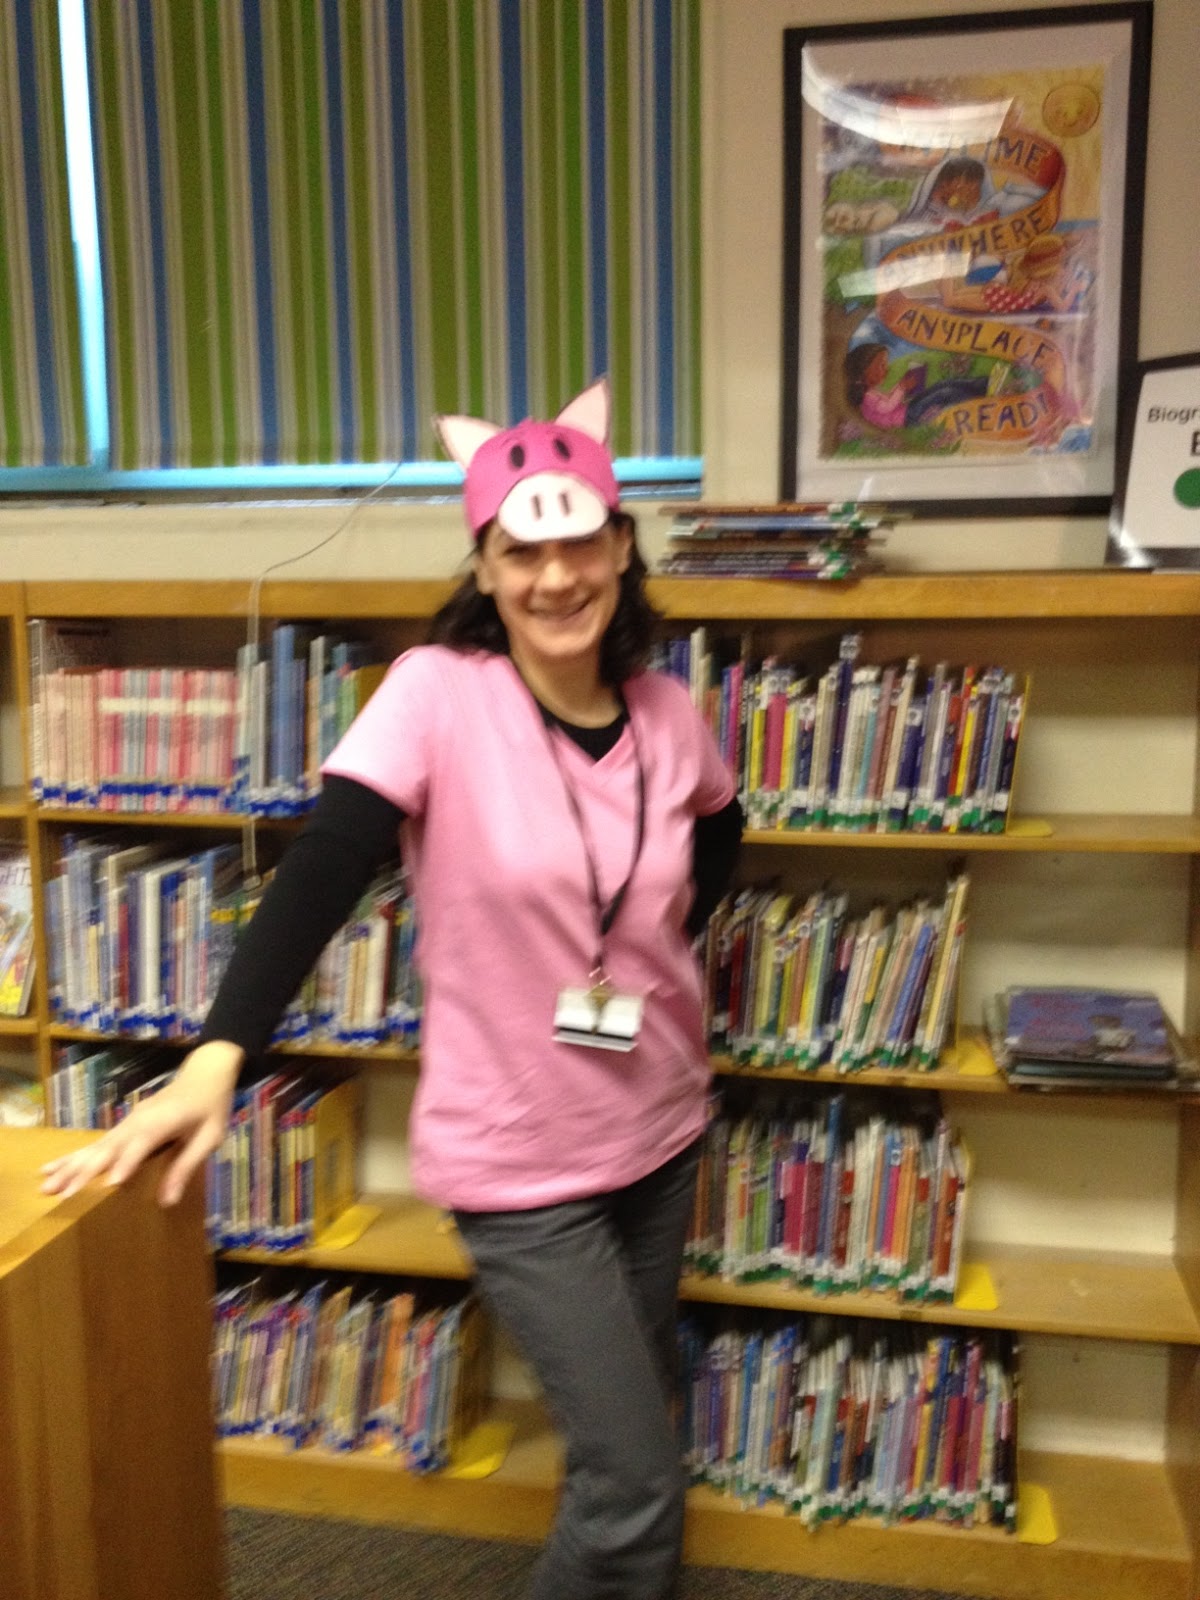 Pine Glen Elementary School Principal's Blog: Favorite Book Character Day